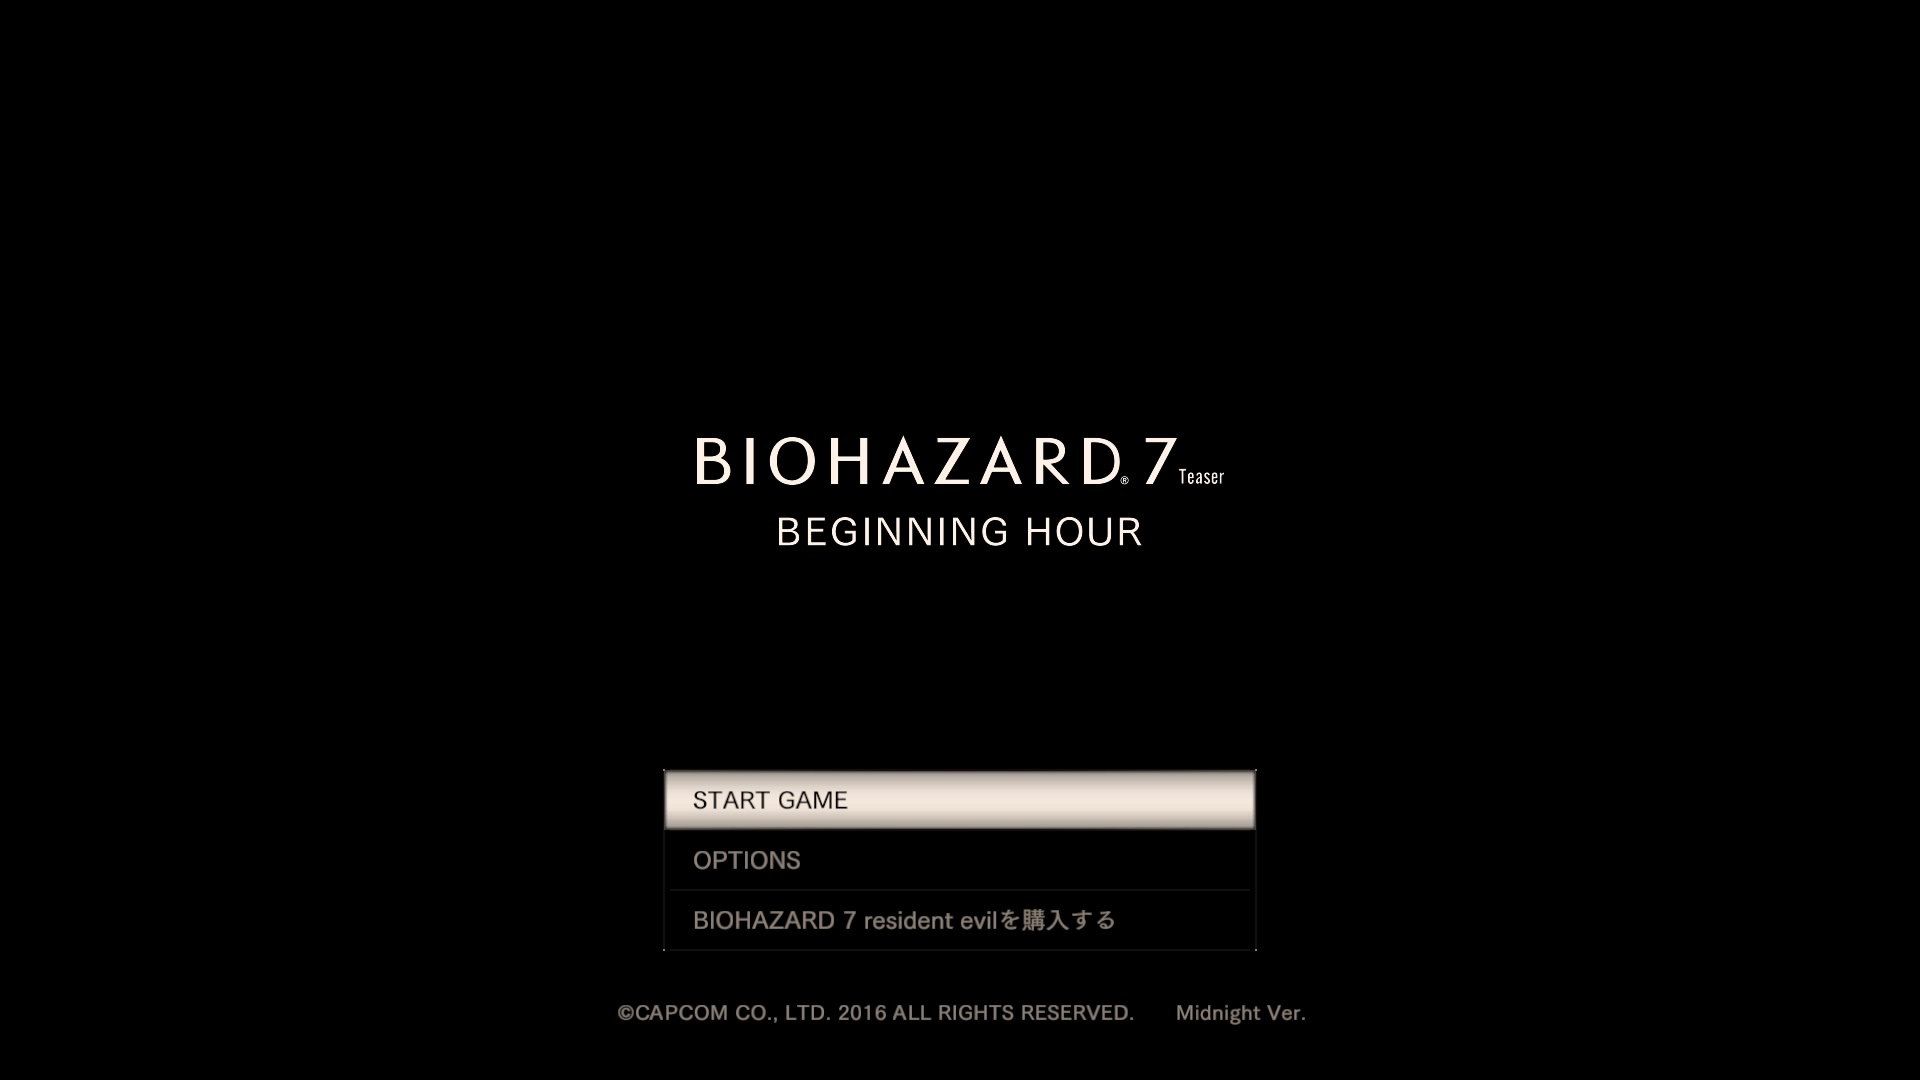 Biohazard 7 Resident Evil 体験版 レビューbyみなと ゲーマー夫婦 みなとも Gamelovebirds Minatomo